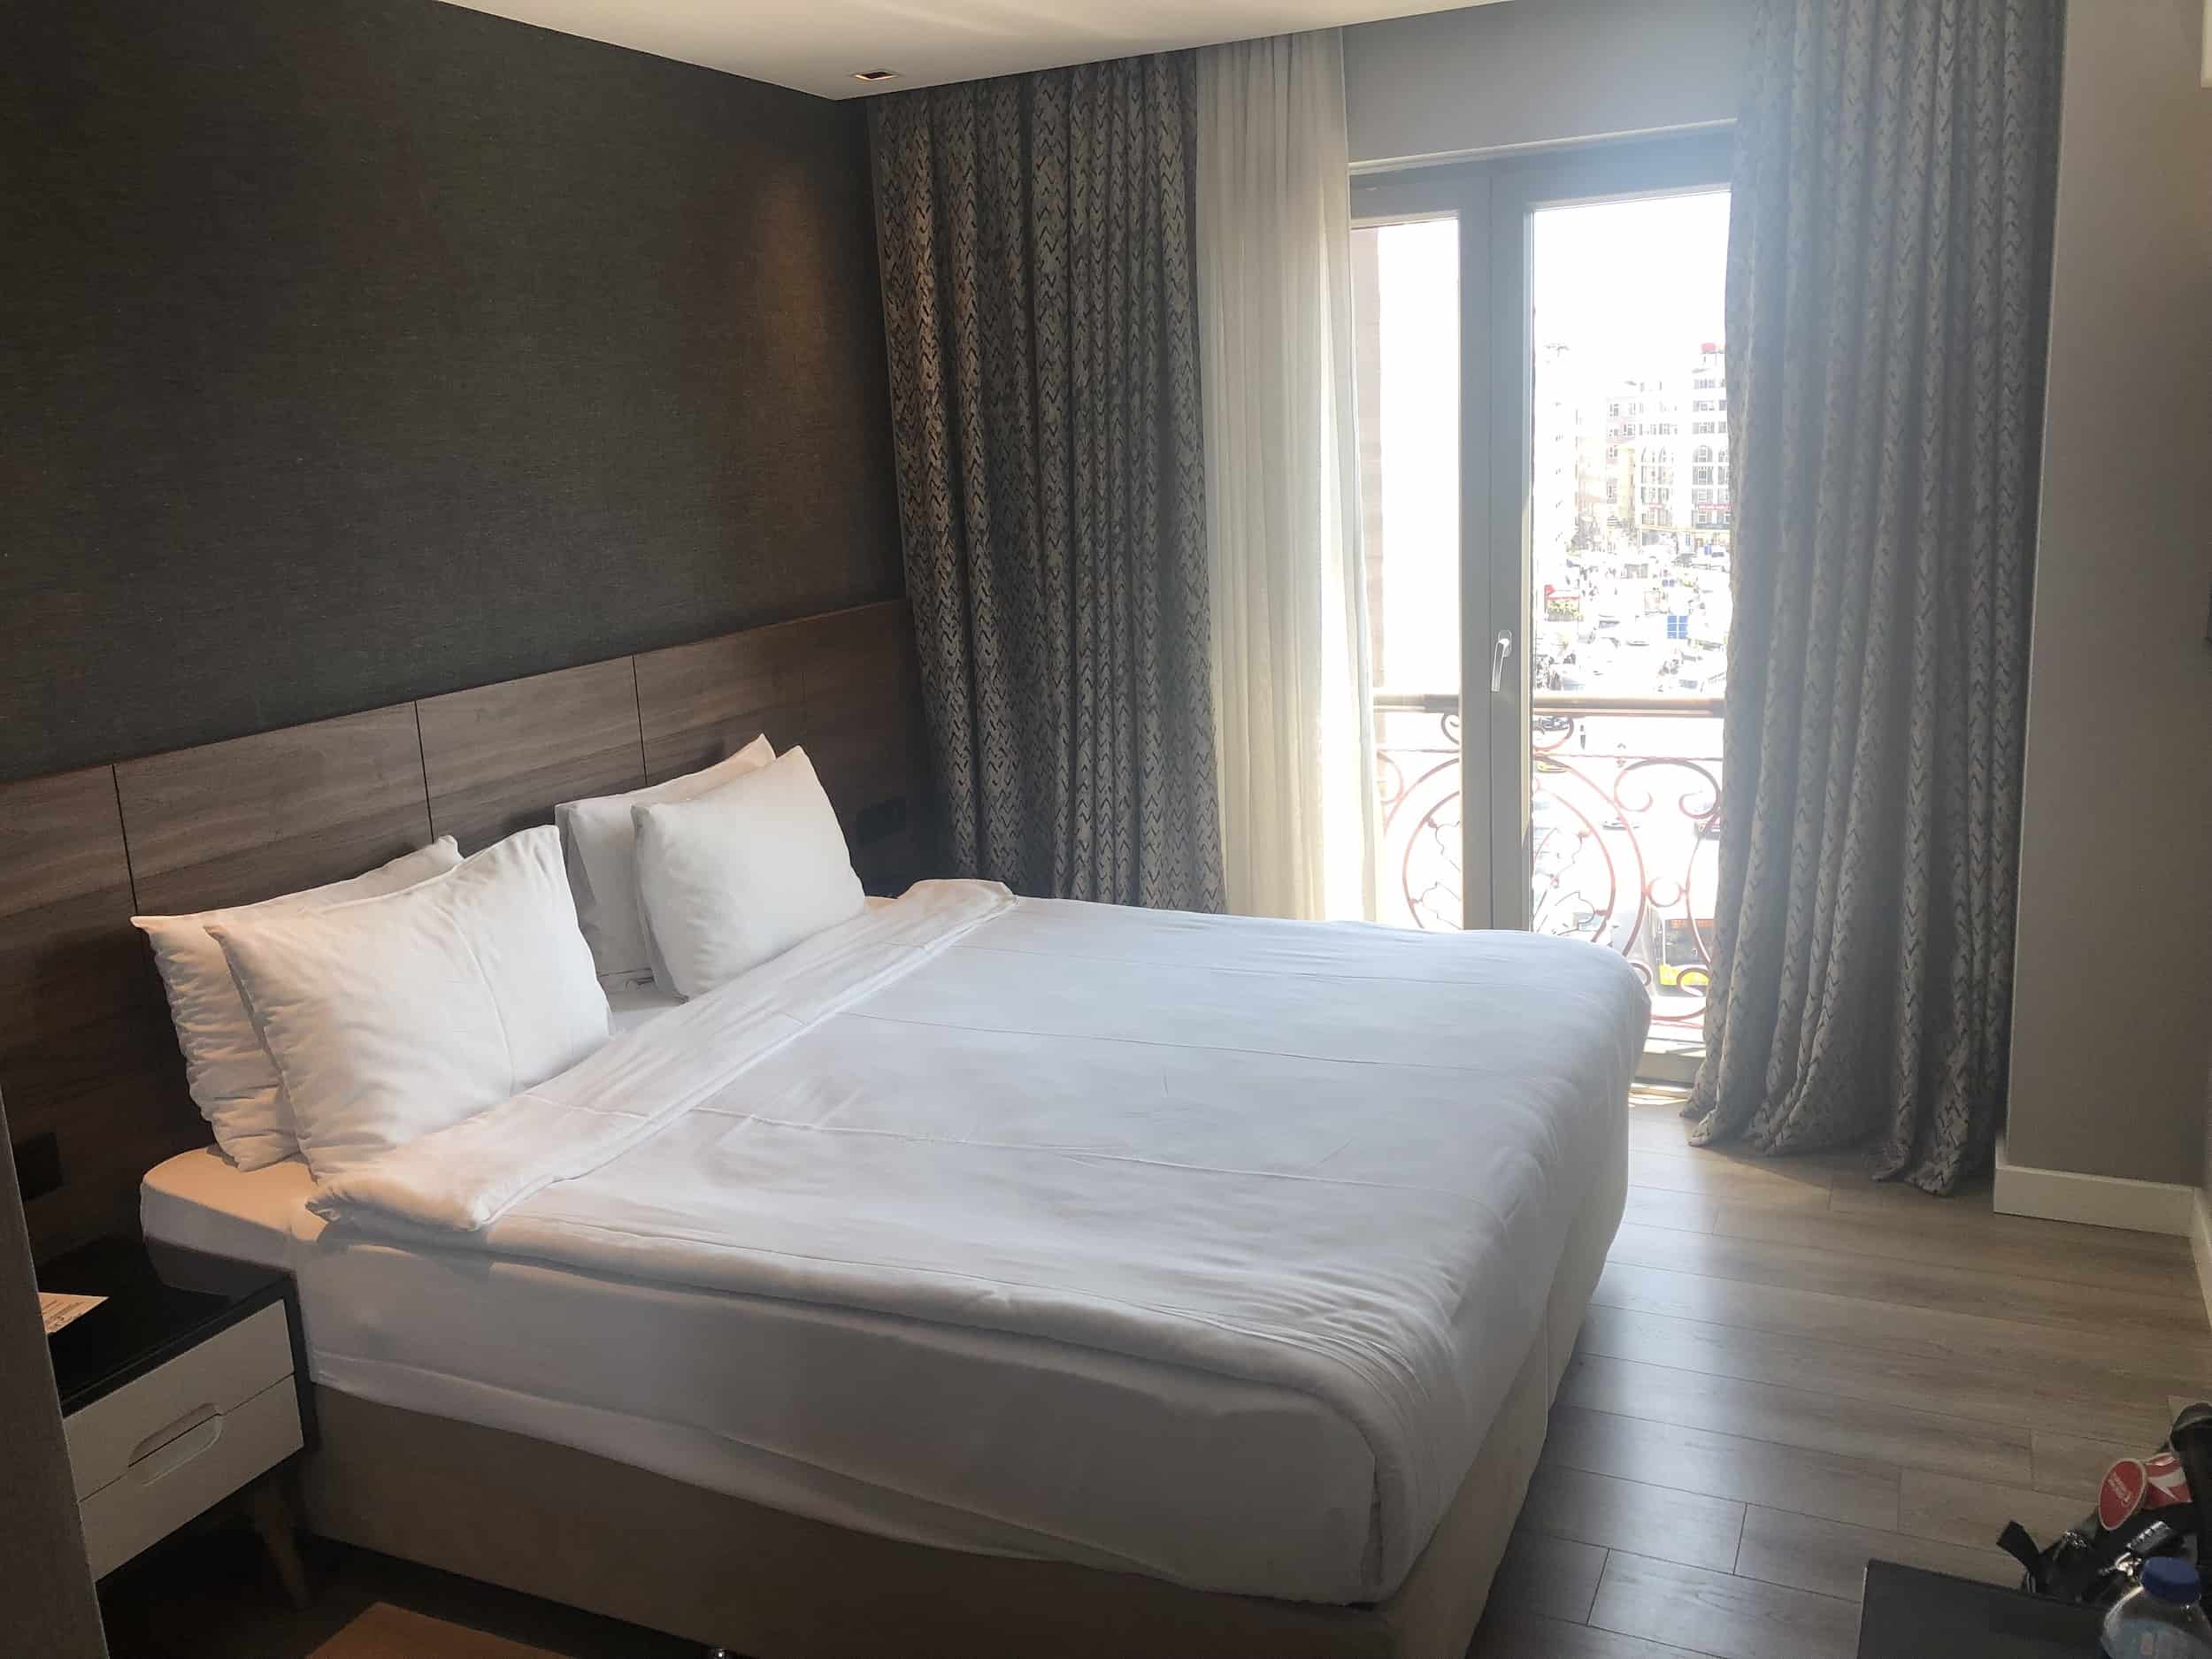 My room at the Dora Pera Hotel in Istanbul, Turkey